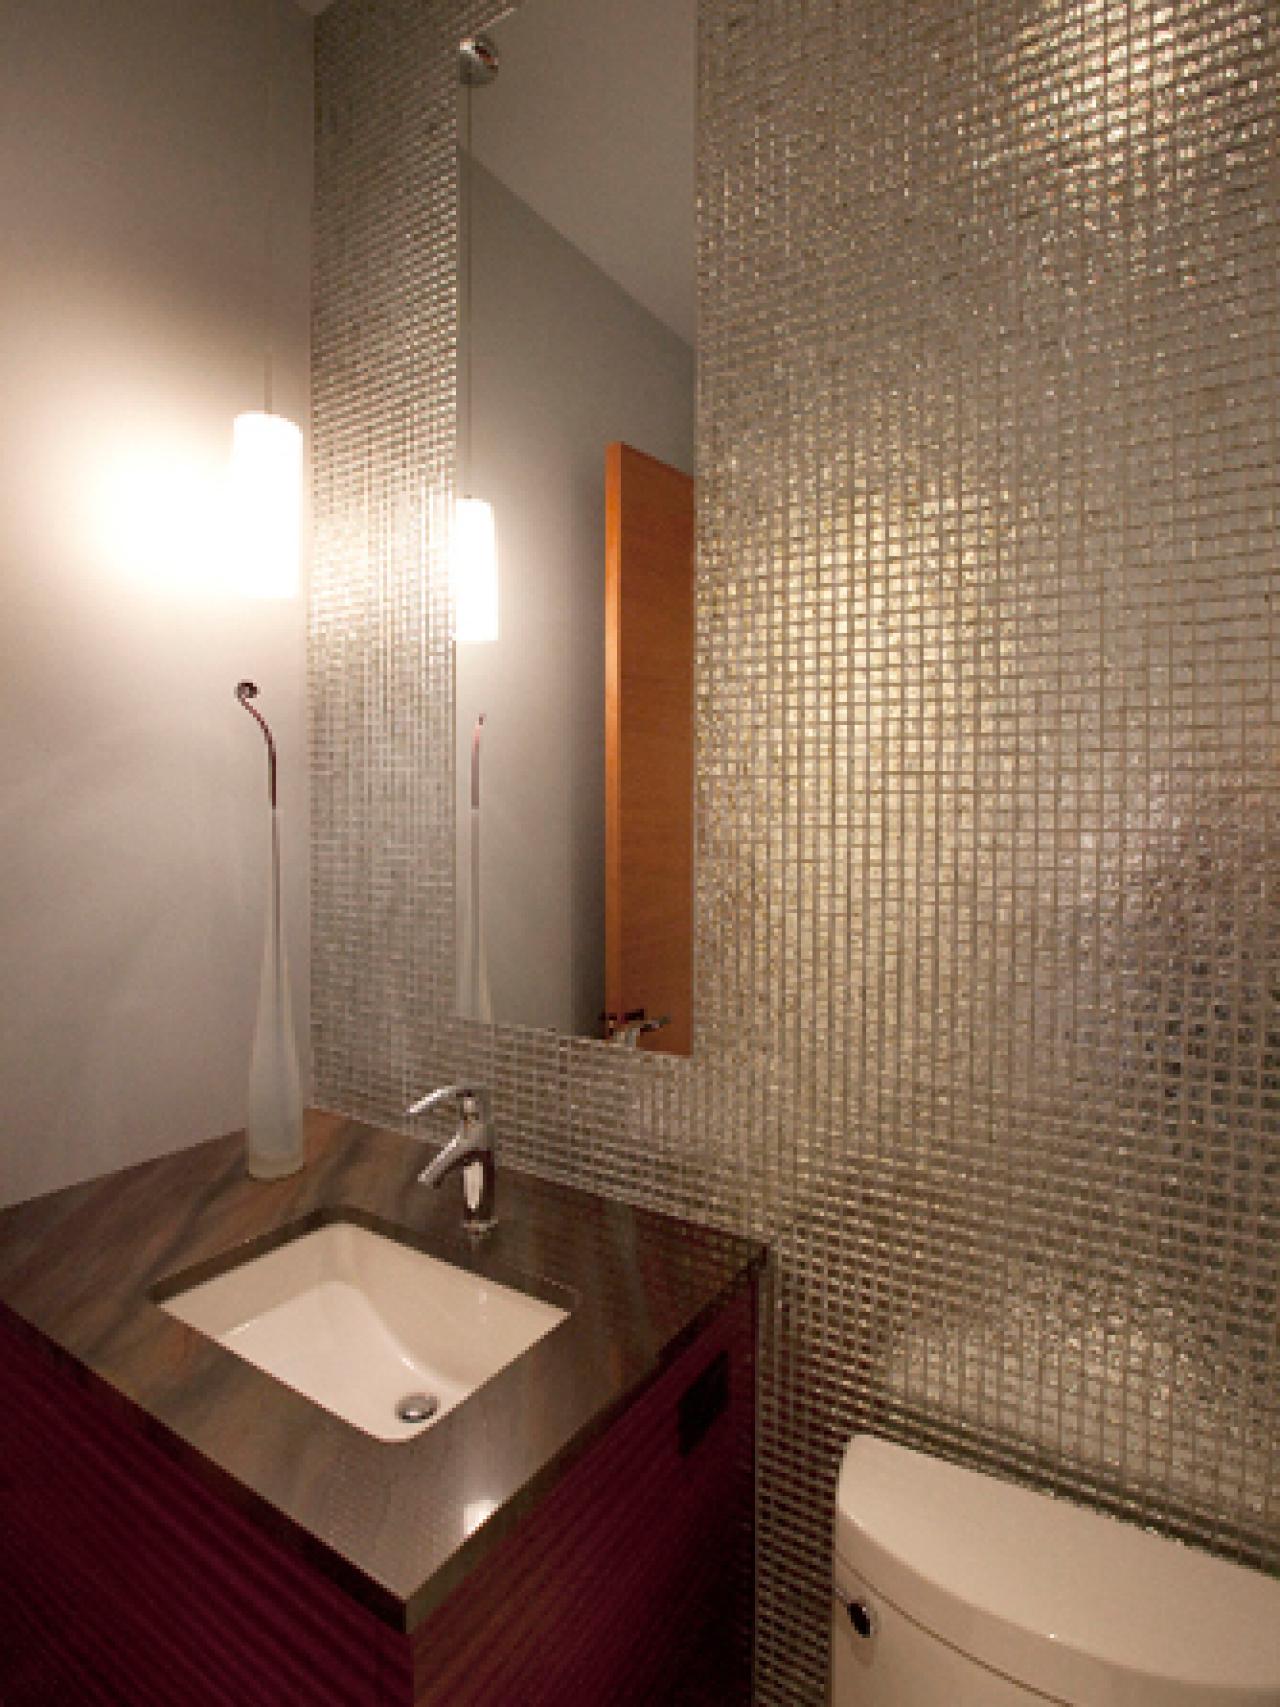 Small Bathrooms, Big Design | HGTV